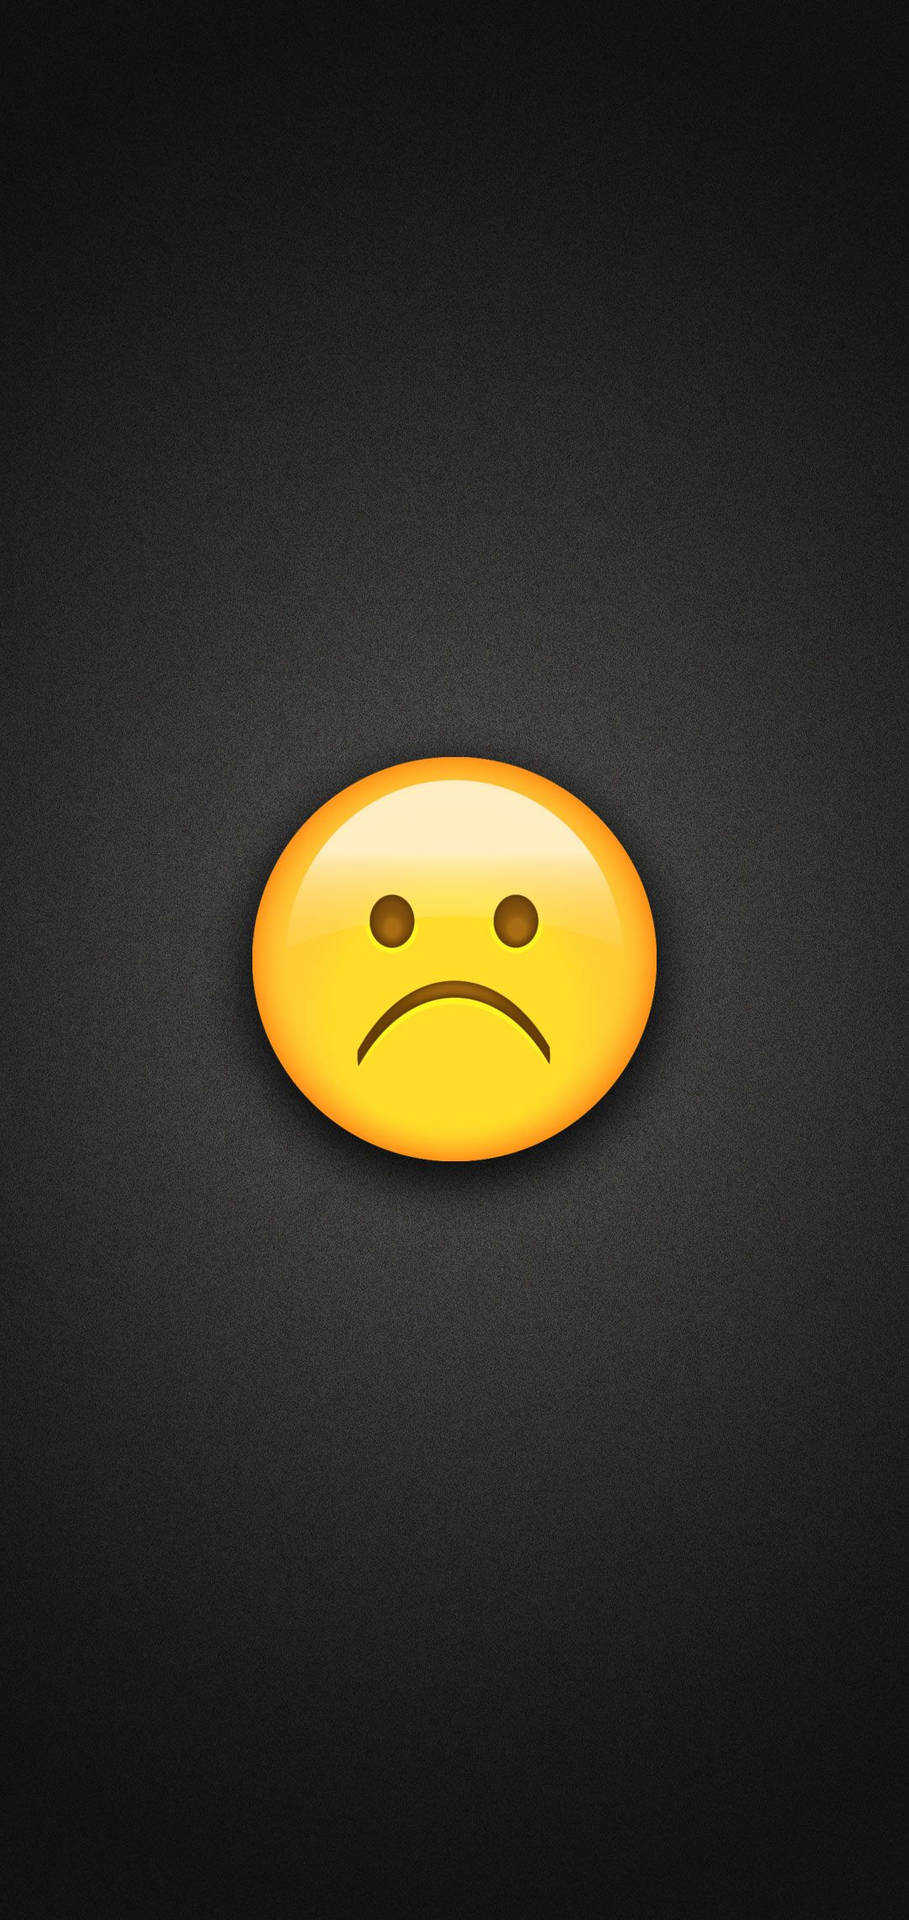 100+] Sad Emoji Wallpapers | Wallpapers.com